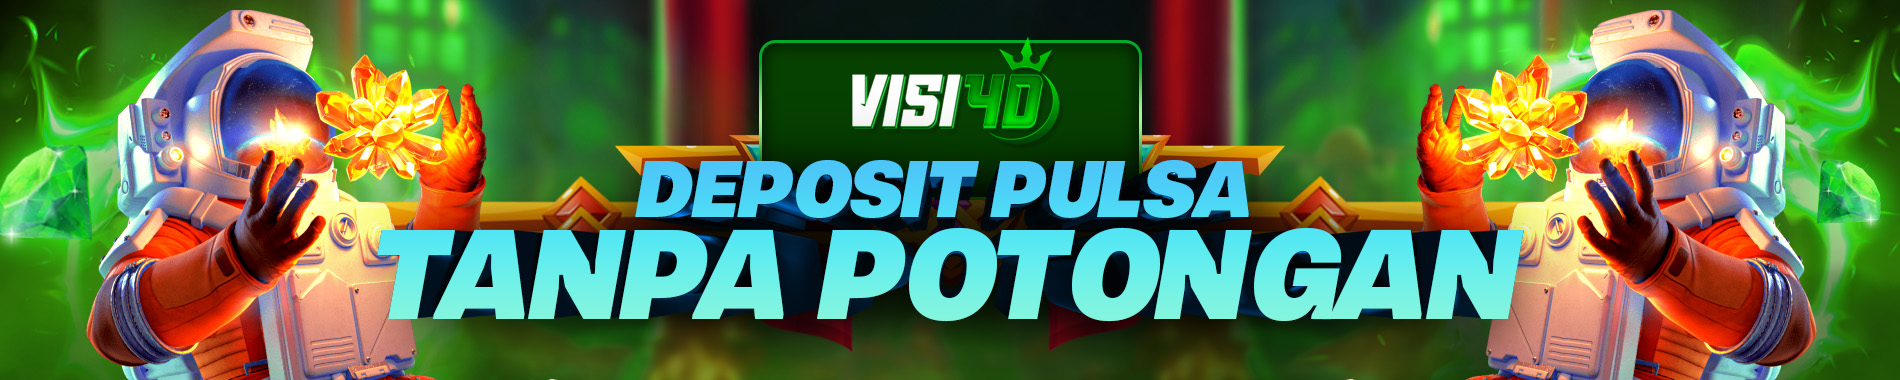 deposit pulsa tanpa potongan VISI4D